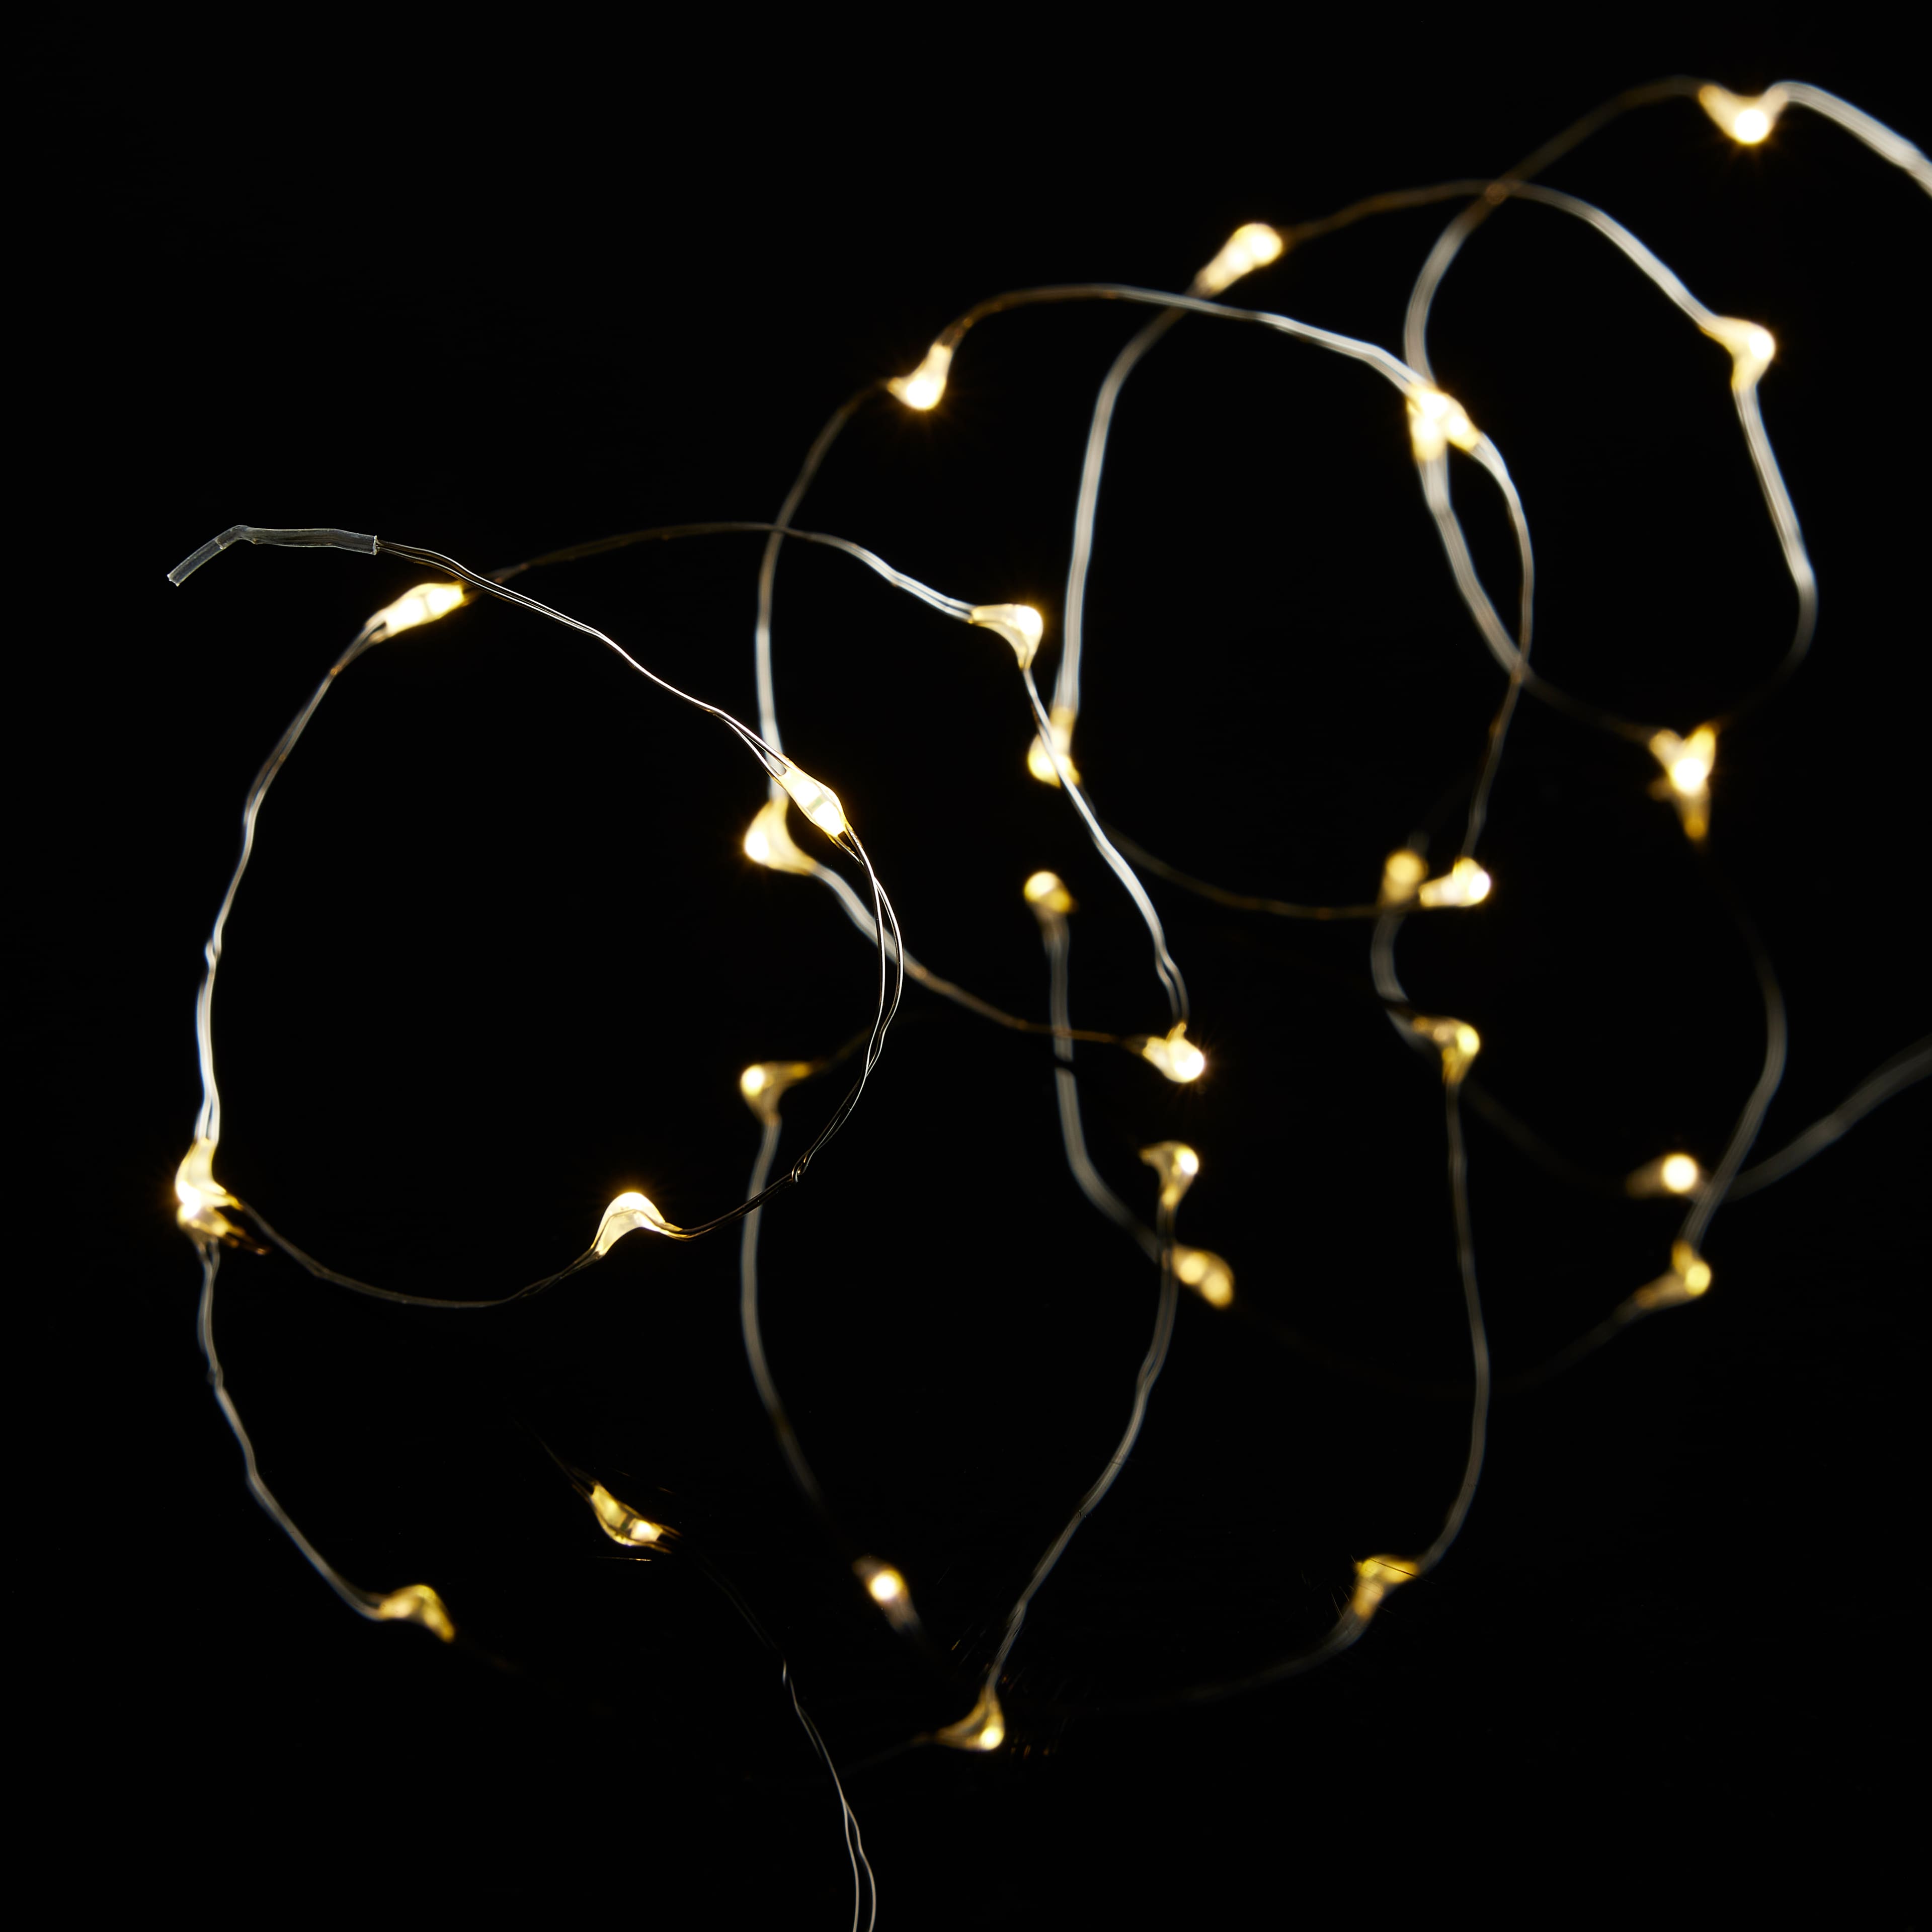 Shop for the Shimmer Lights™ White LED String Lights By Ashland® at Michaels